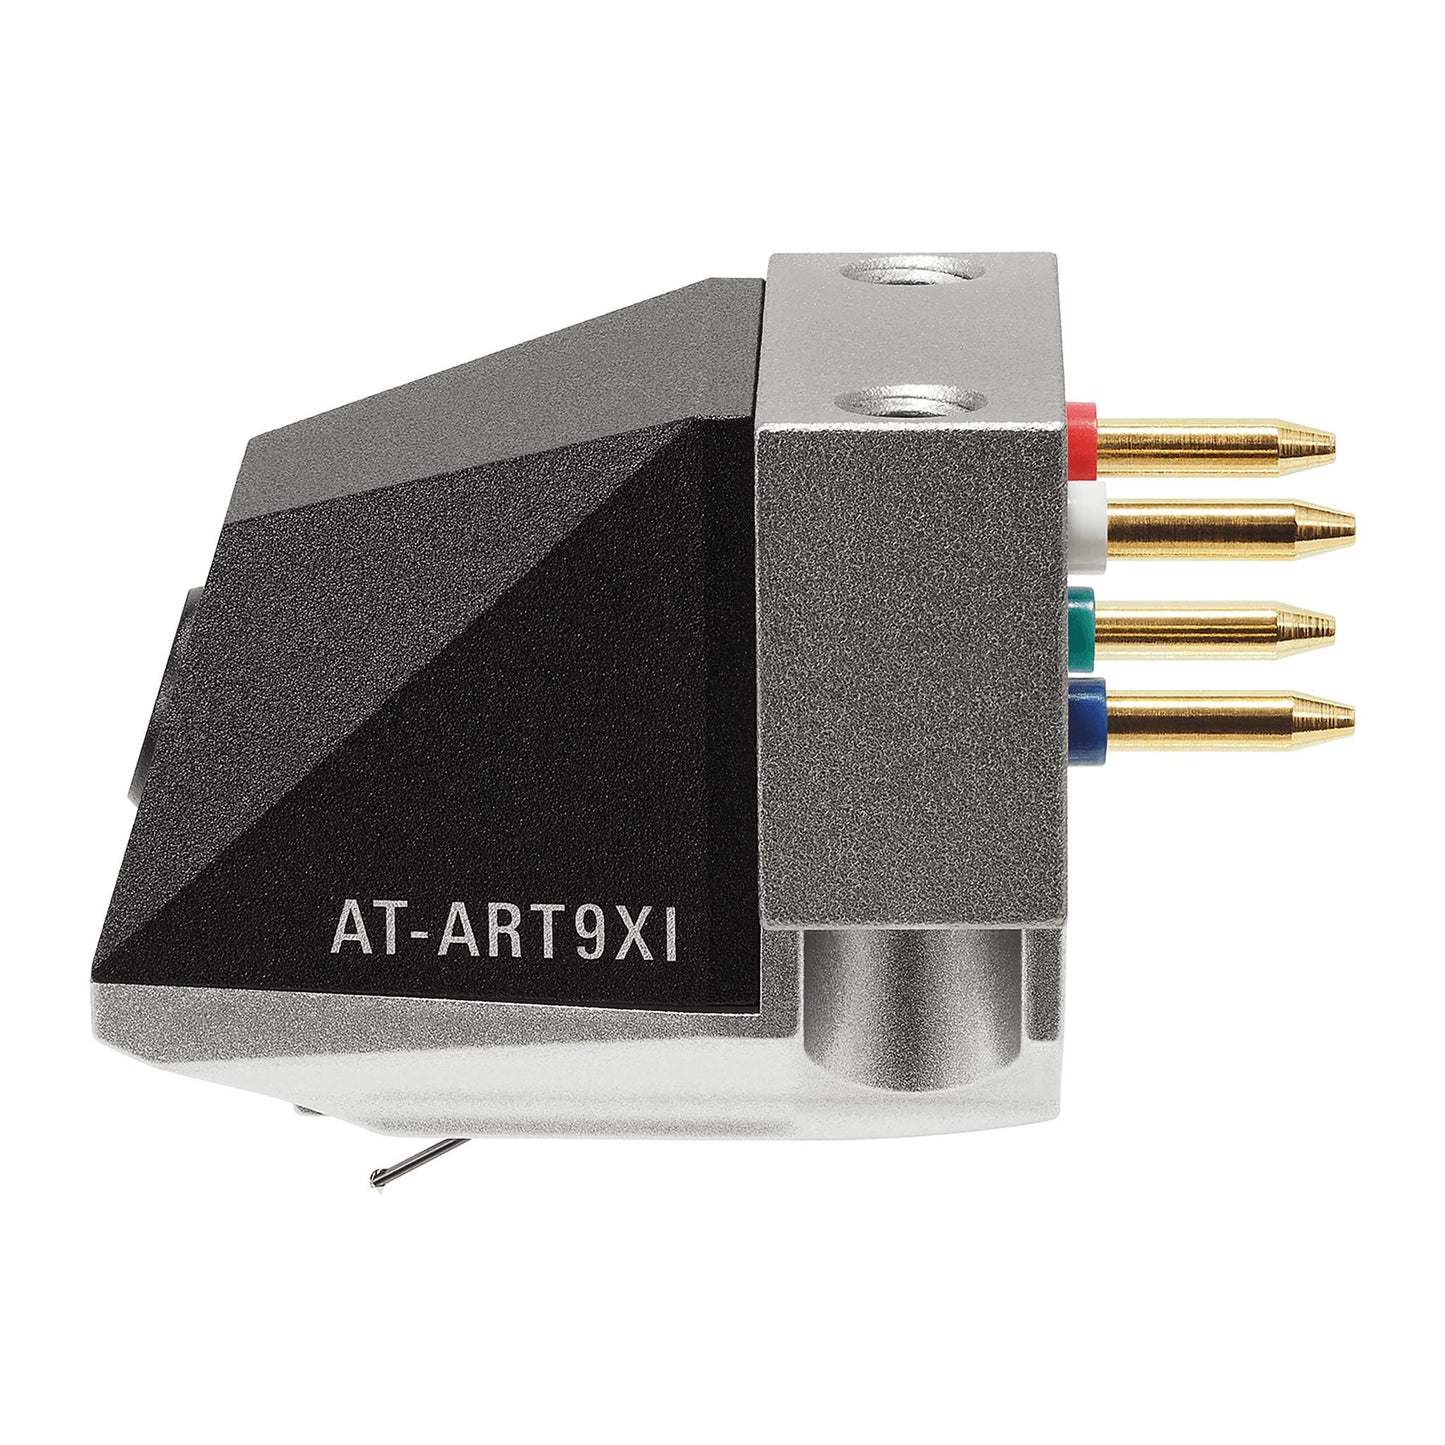 Audio-Technica ART-9xi Moving Coil Cartridge